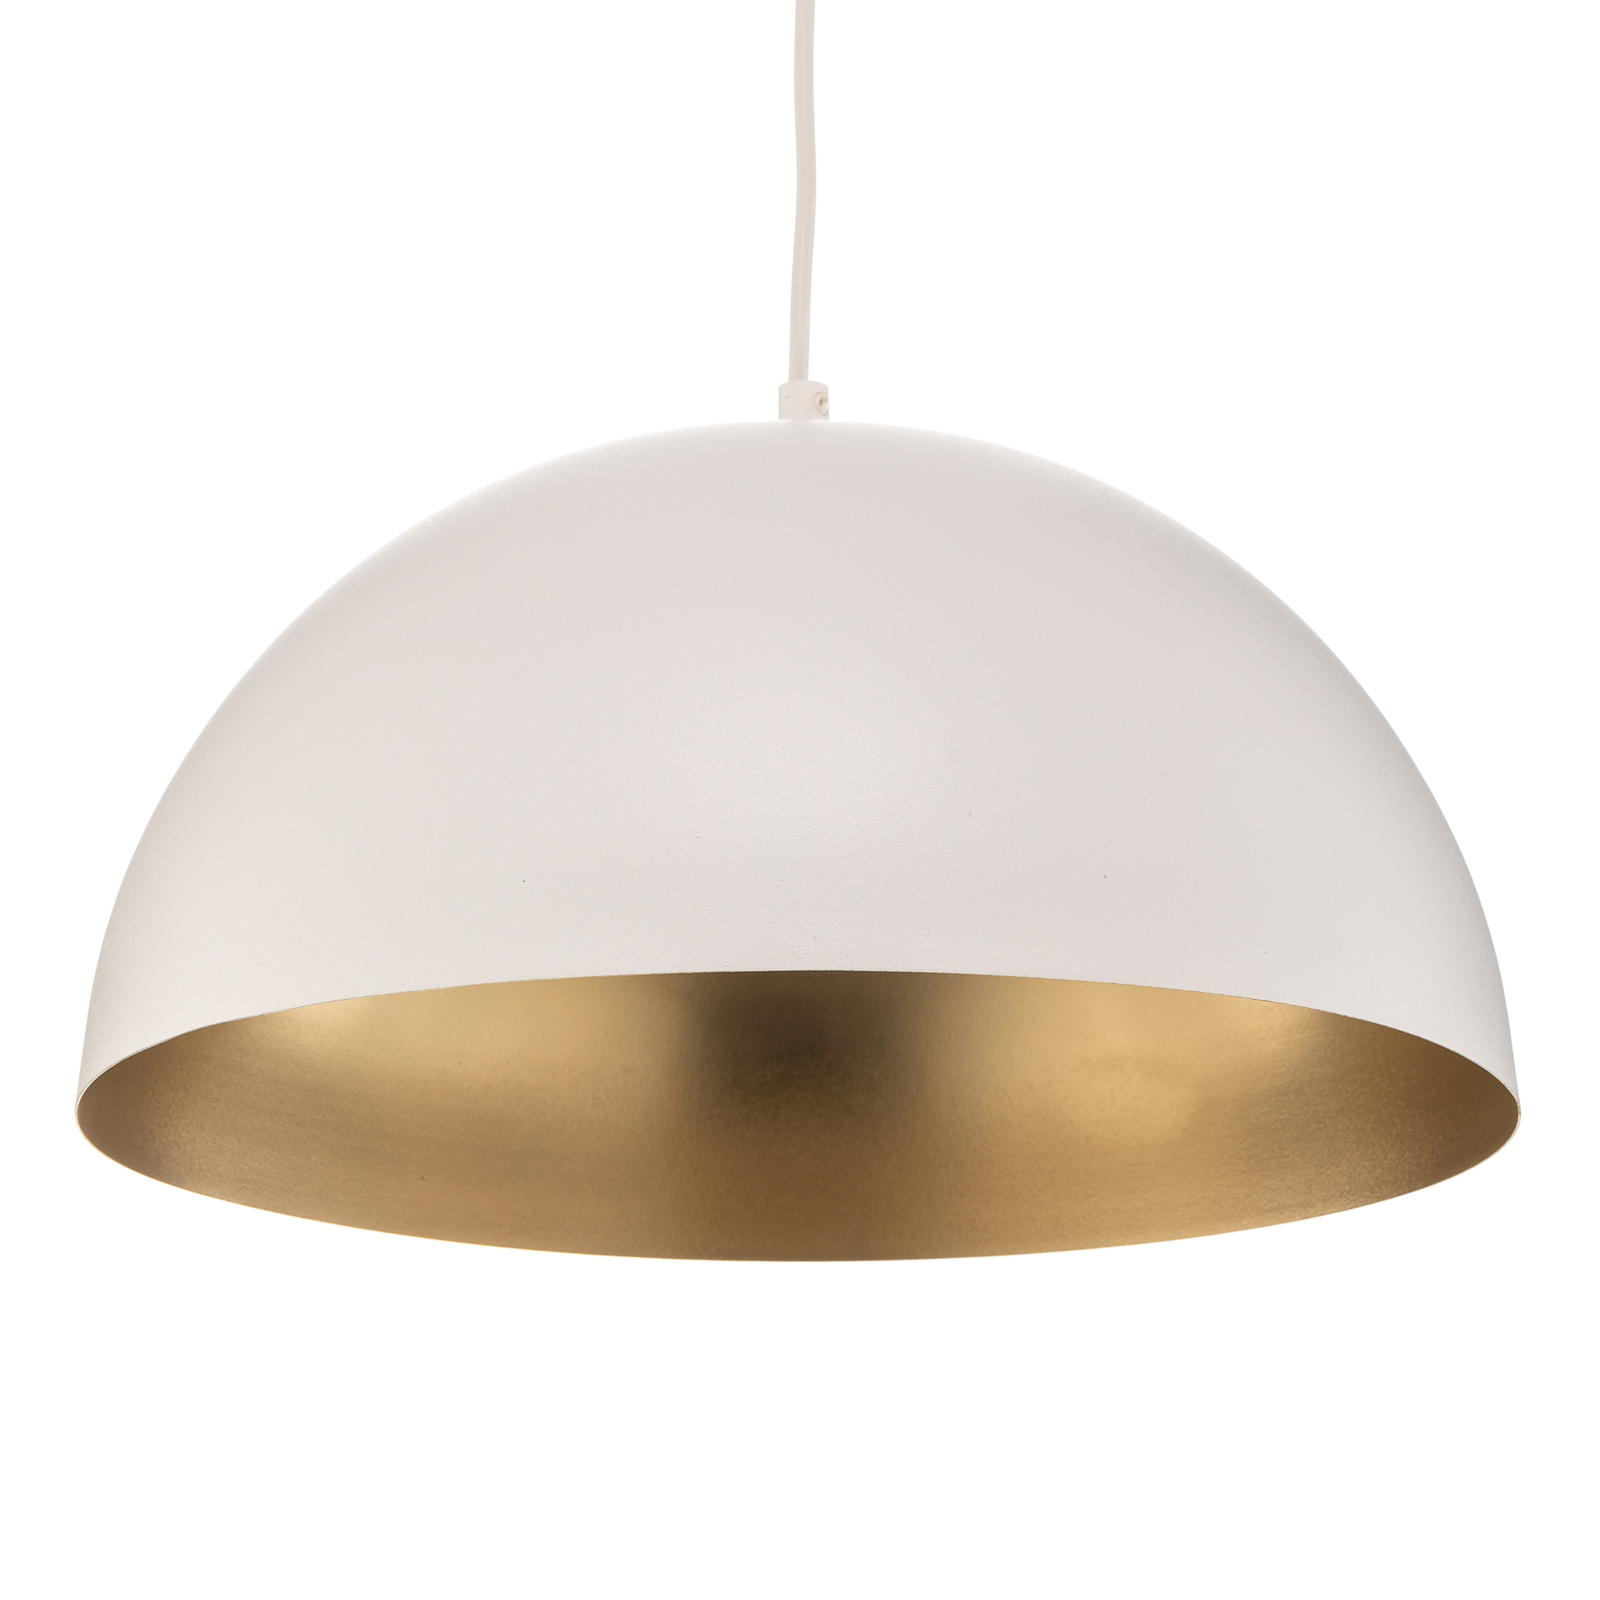 Hanglamp Beta in wit-goud